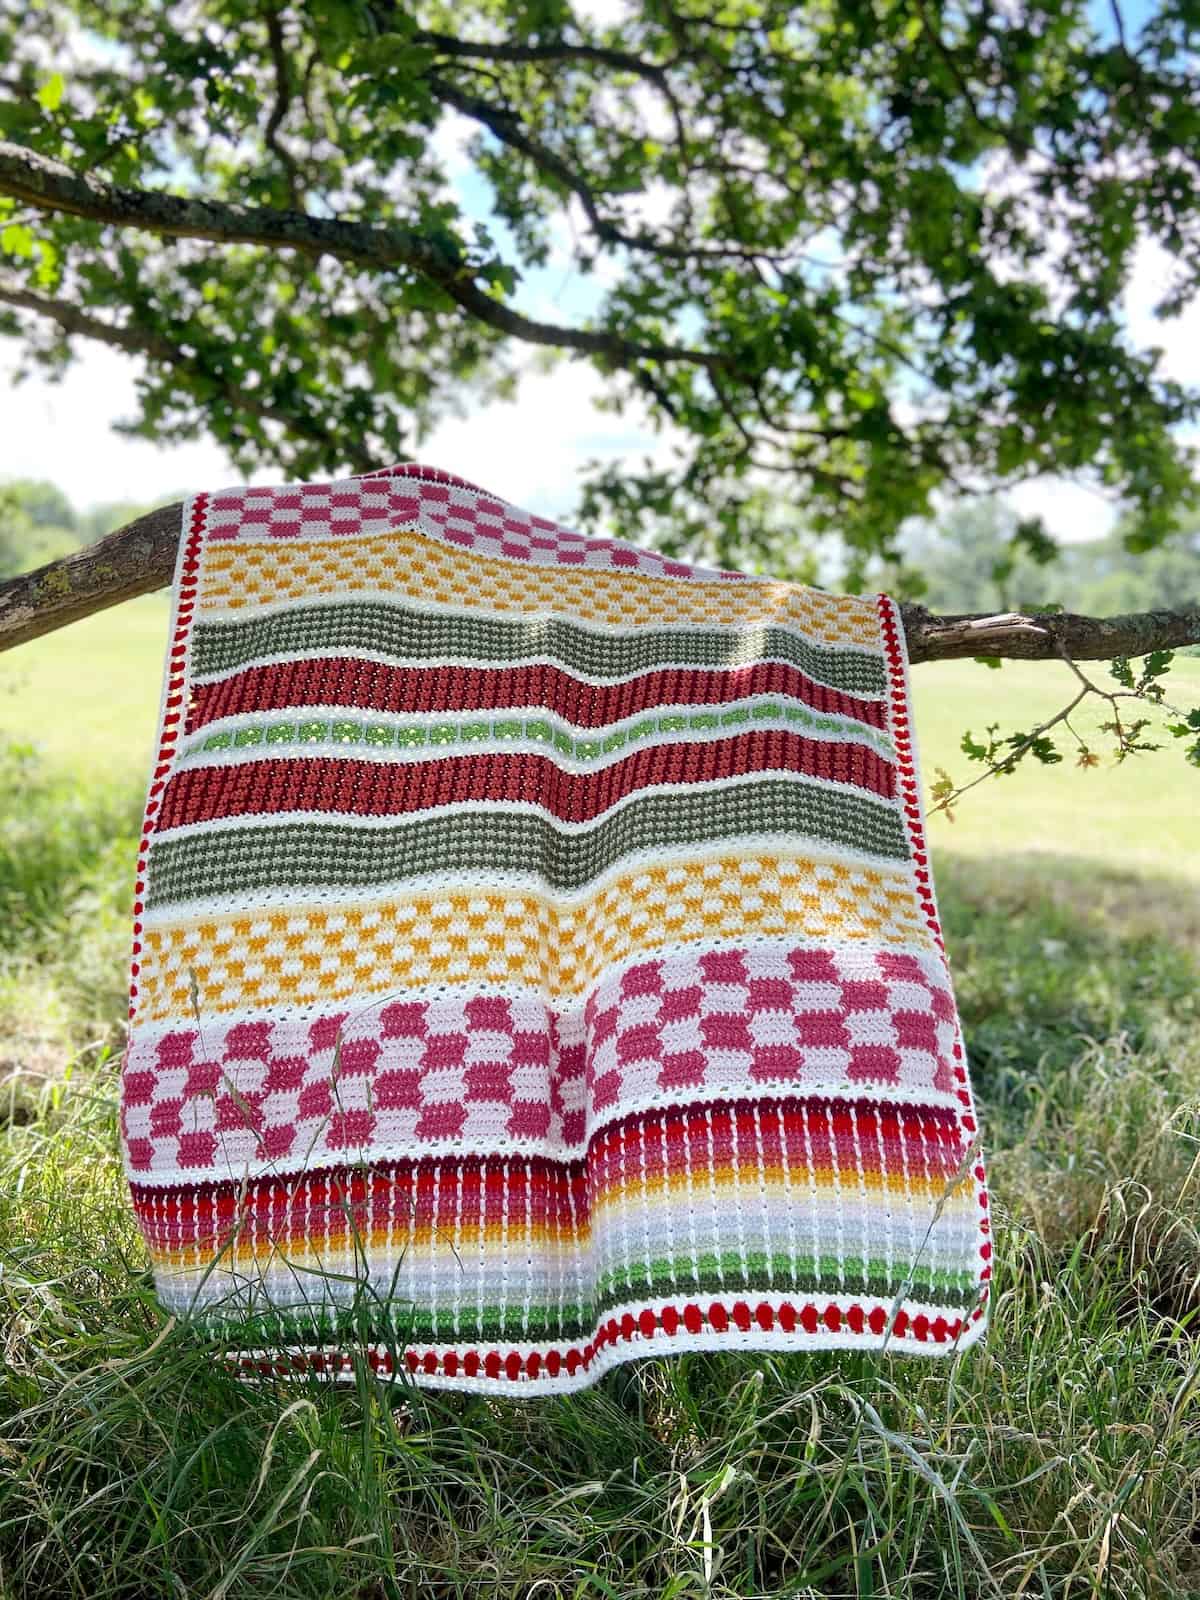 Multi stitch crochet blanket online course.